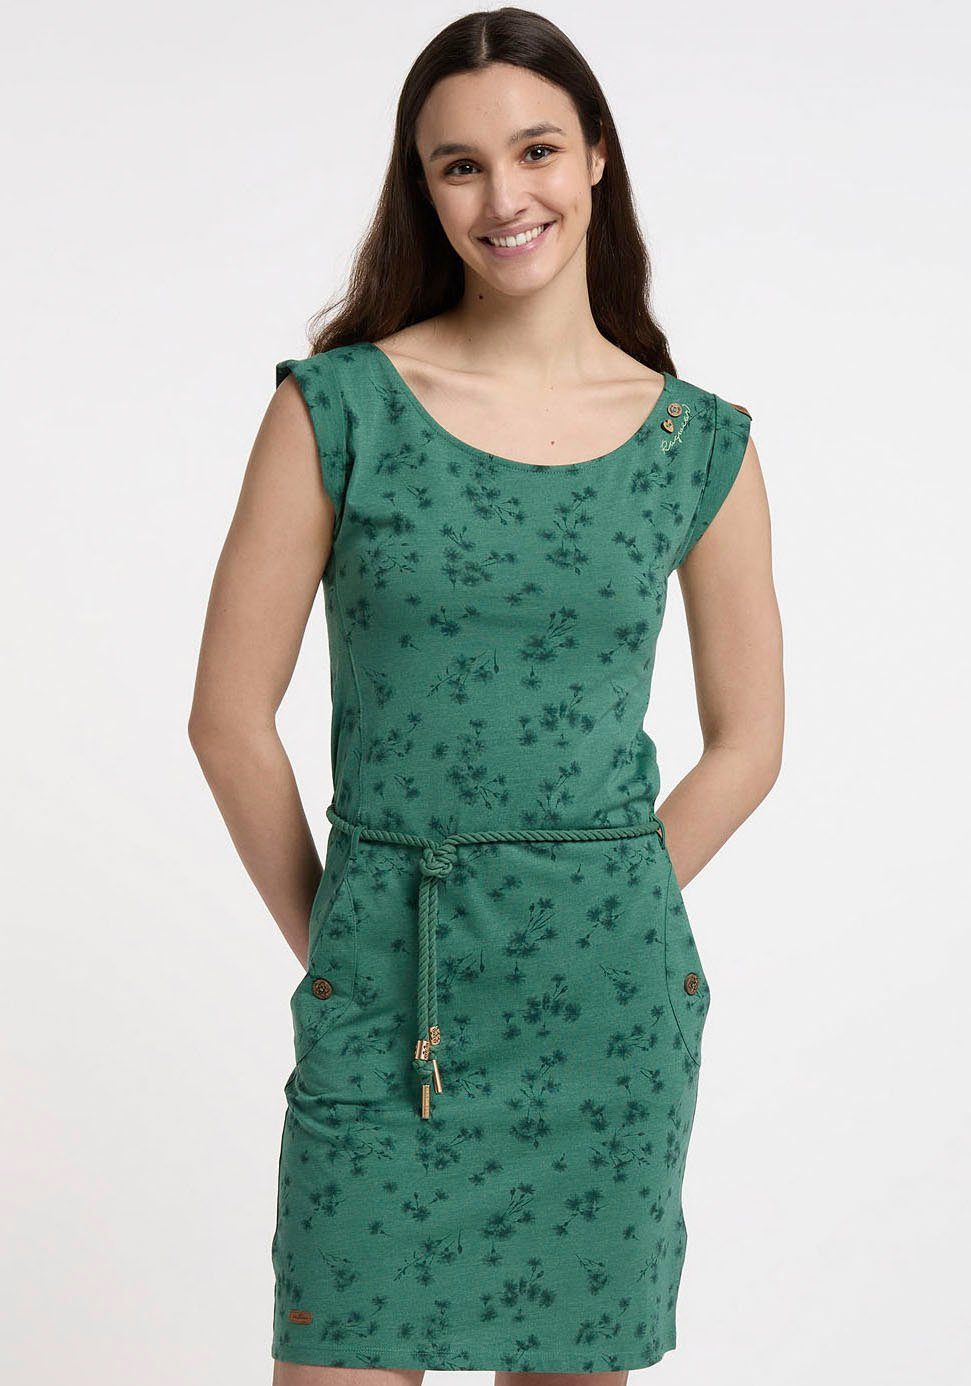 Ragwear Jerseykleid TAGG BLUETE 5023 floralen im green Allover-Print